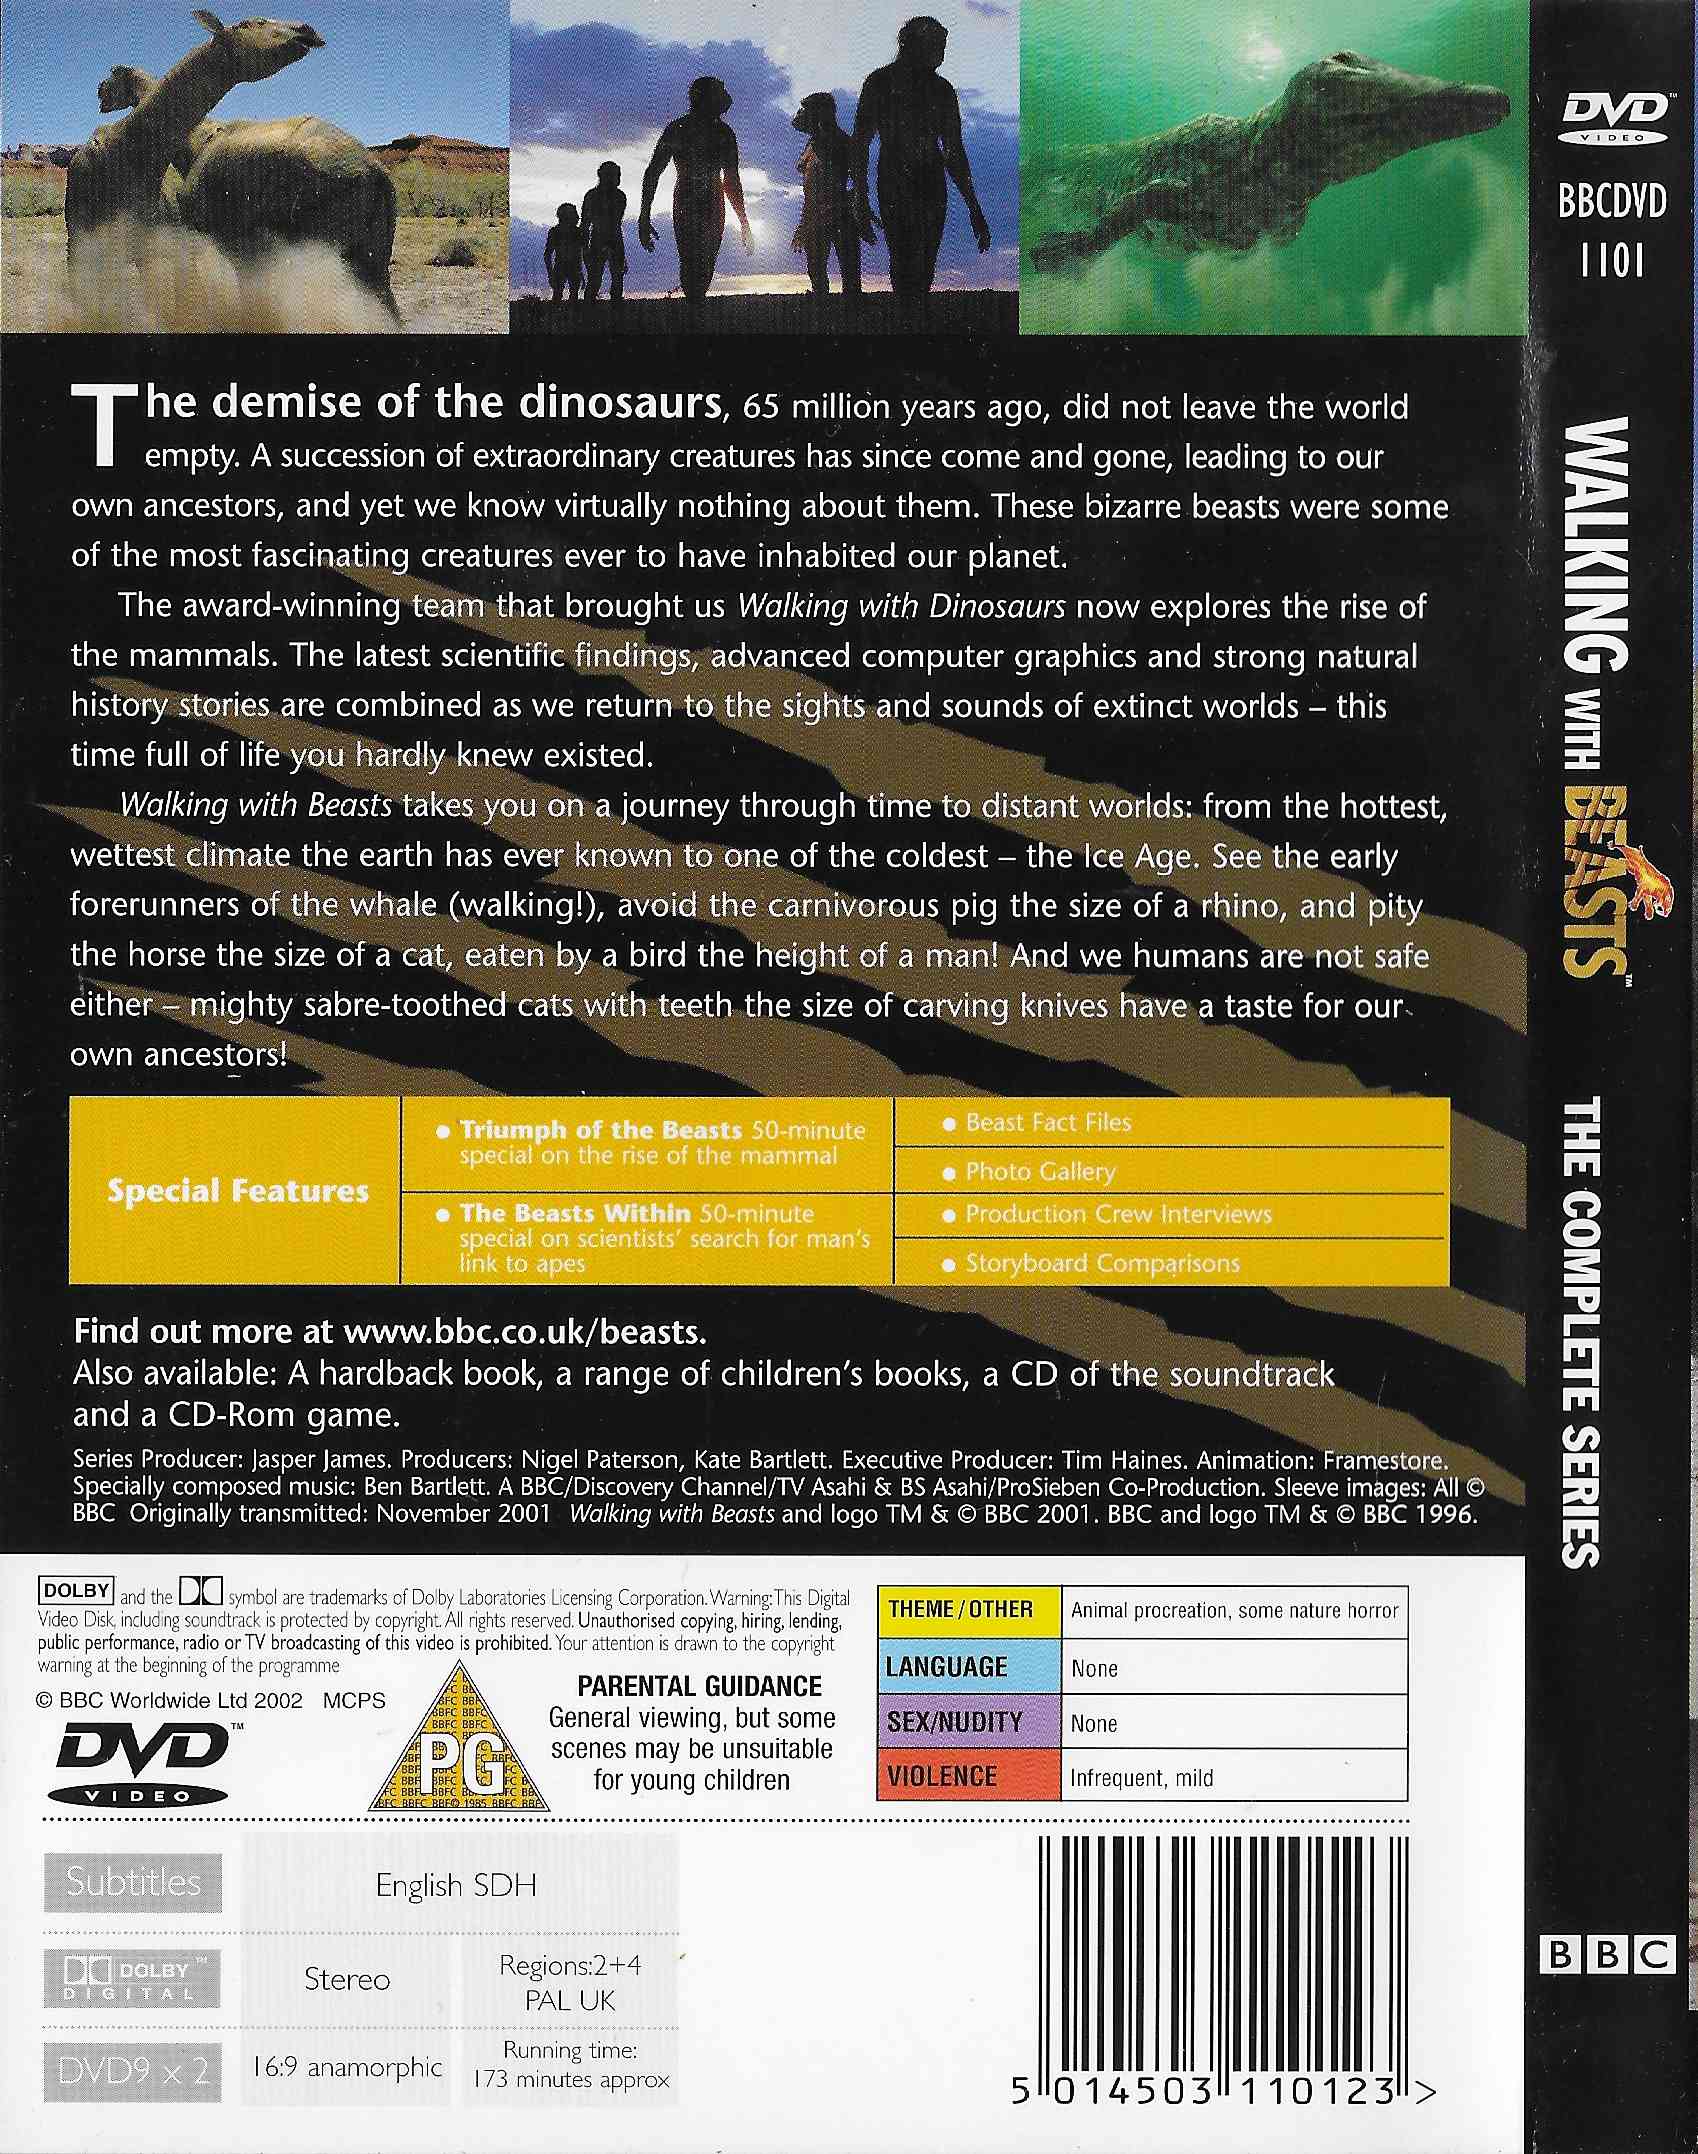 Back cover of BBCDVD 1101